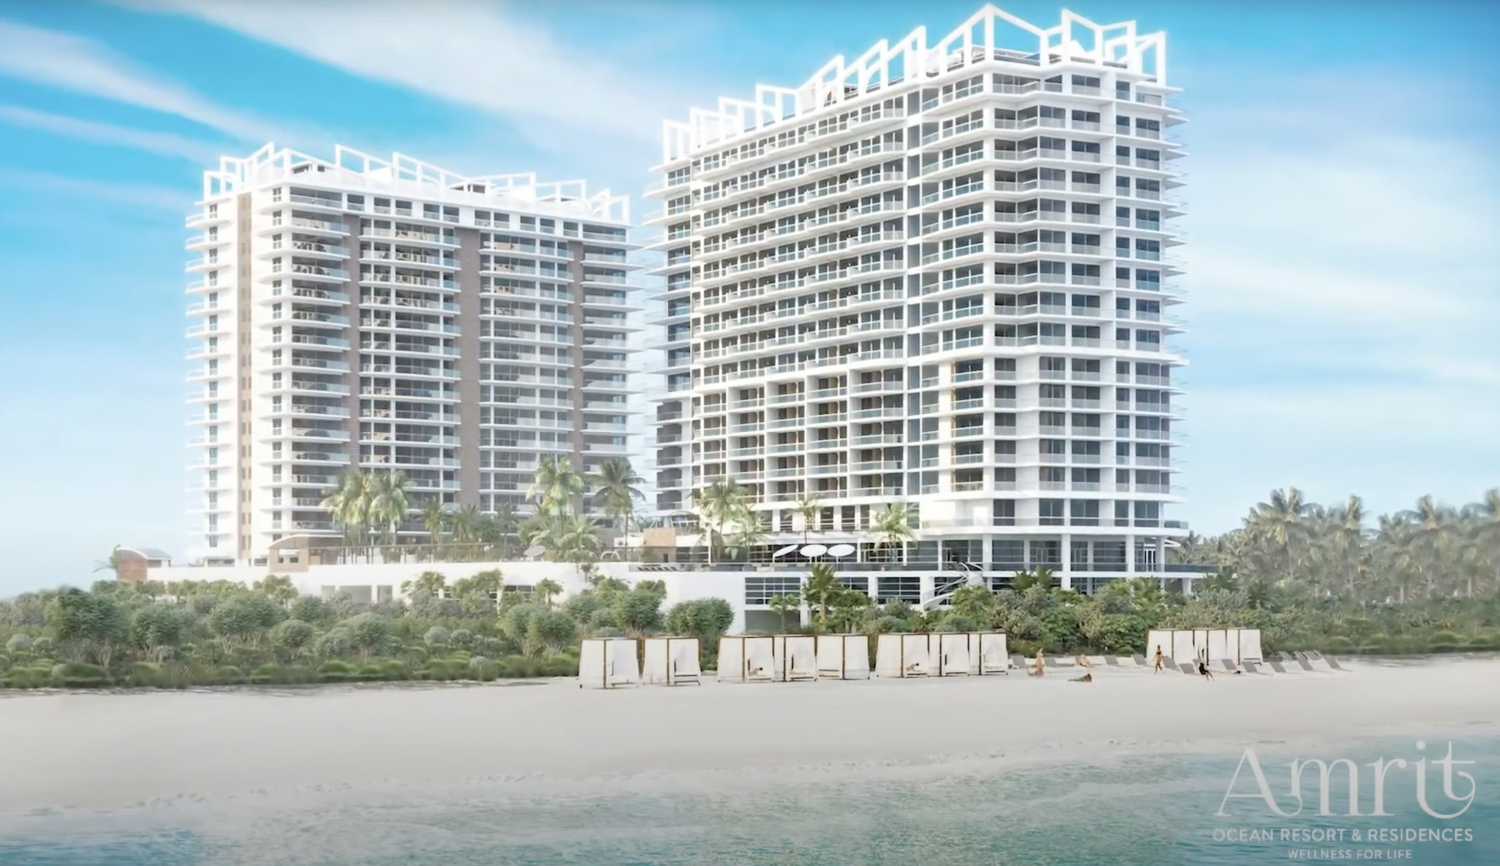 Amrit Ocean Resort Residences. Designed by S & E Architects.